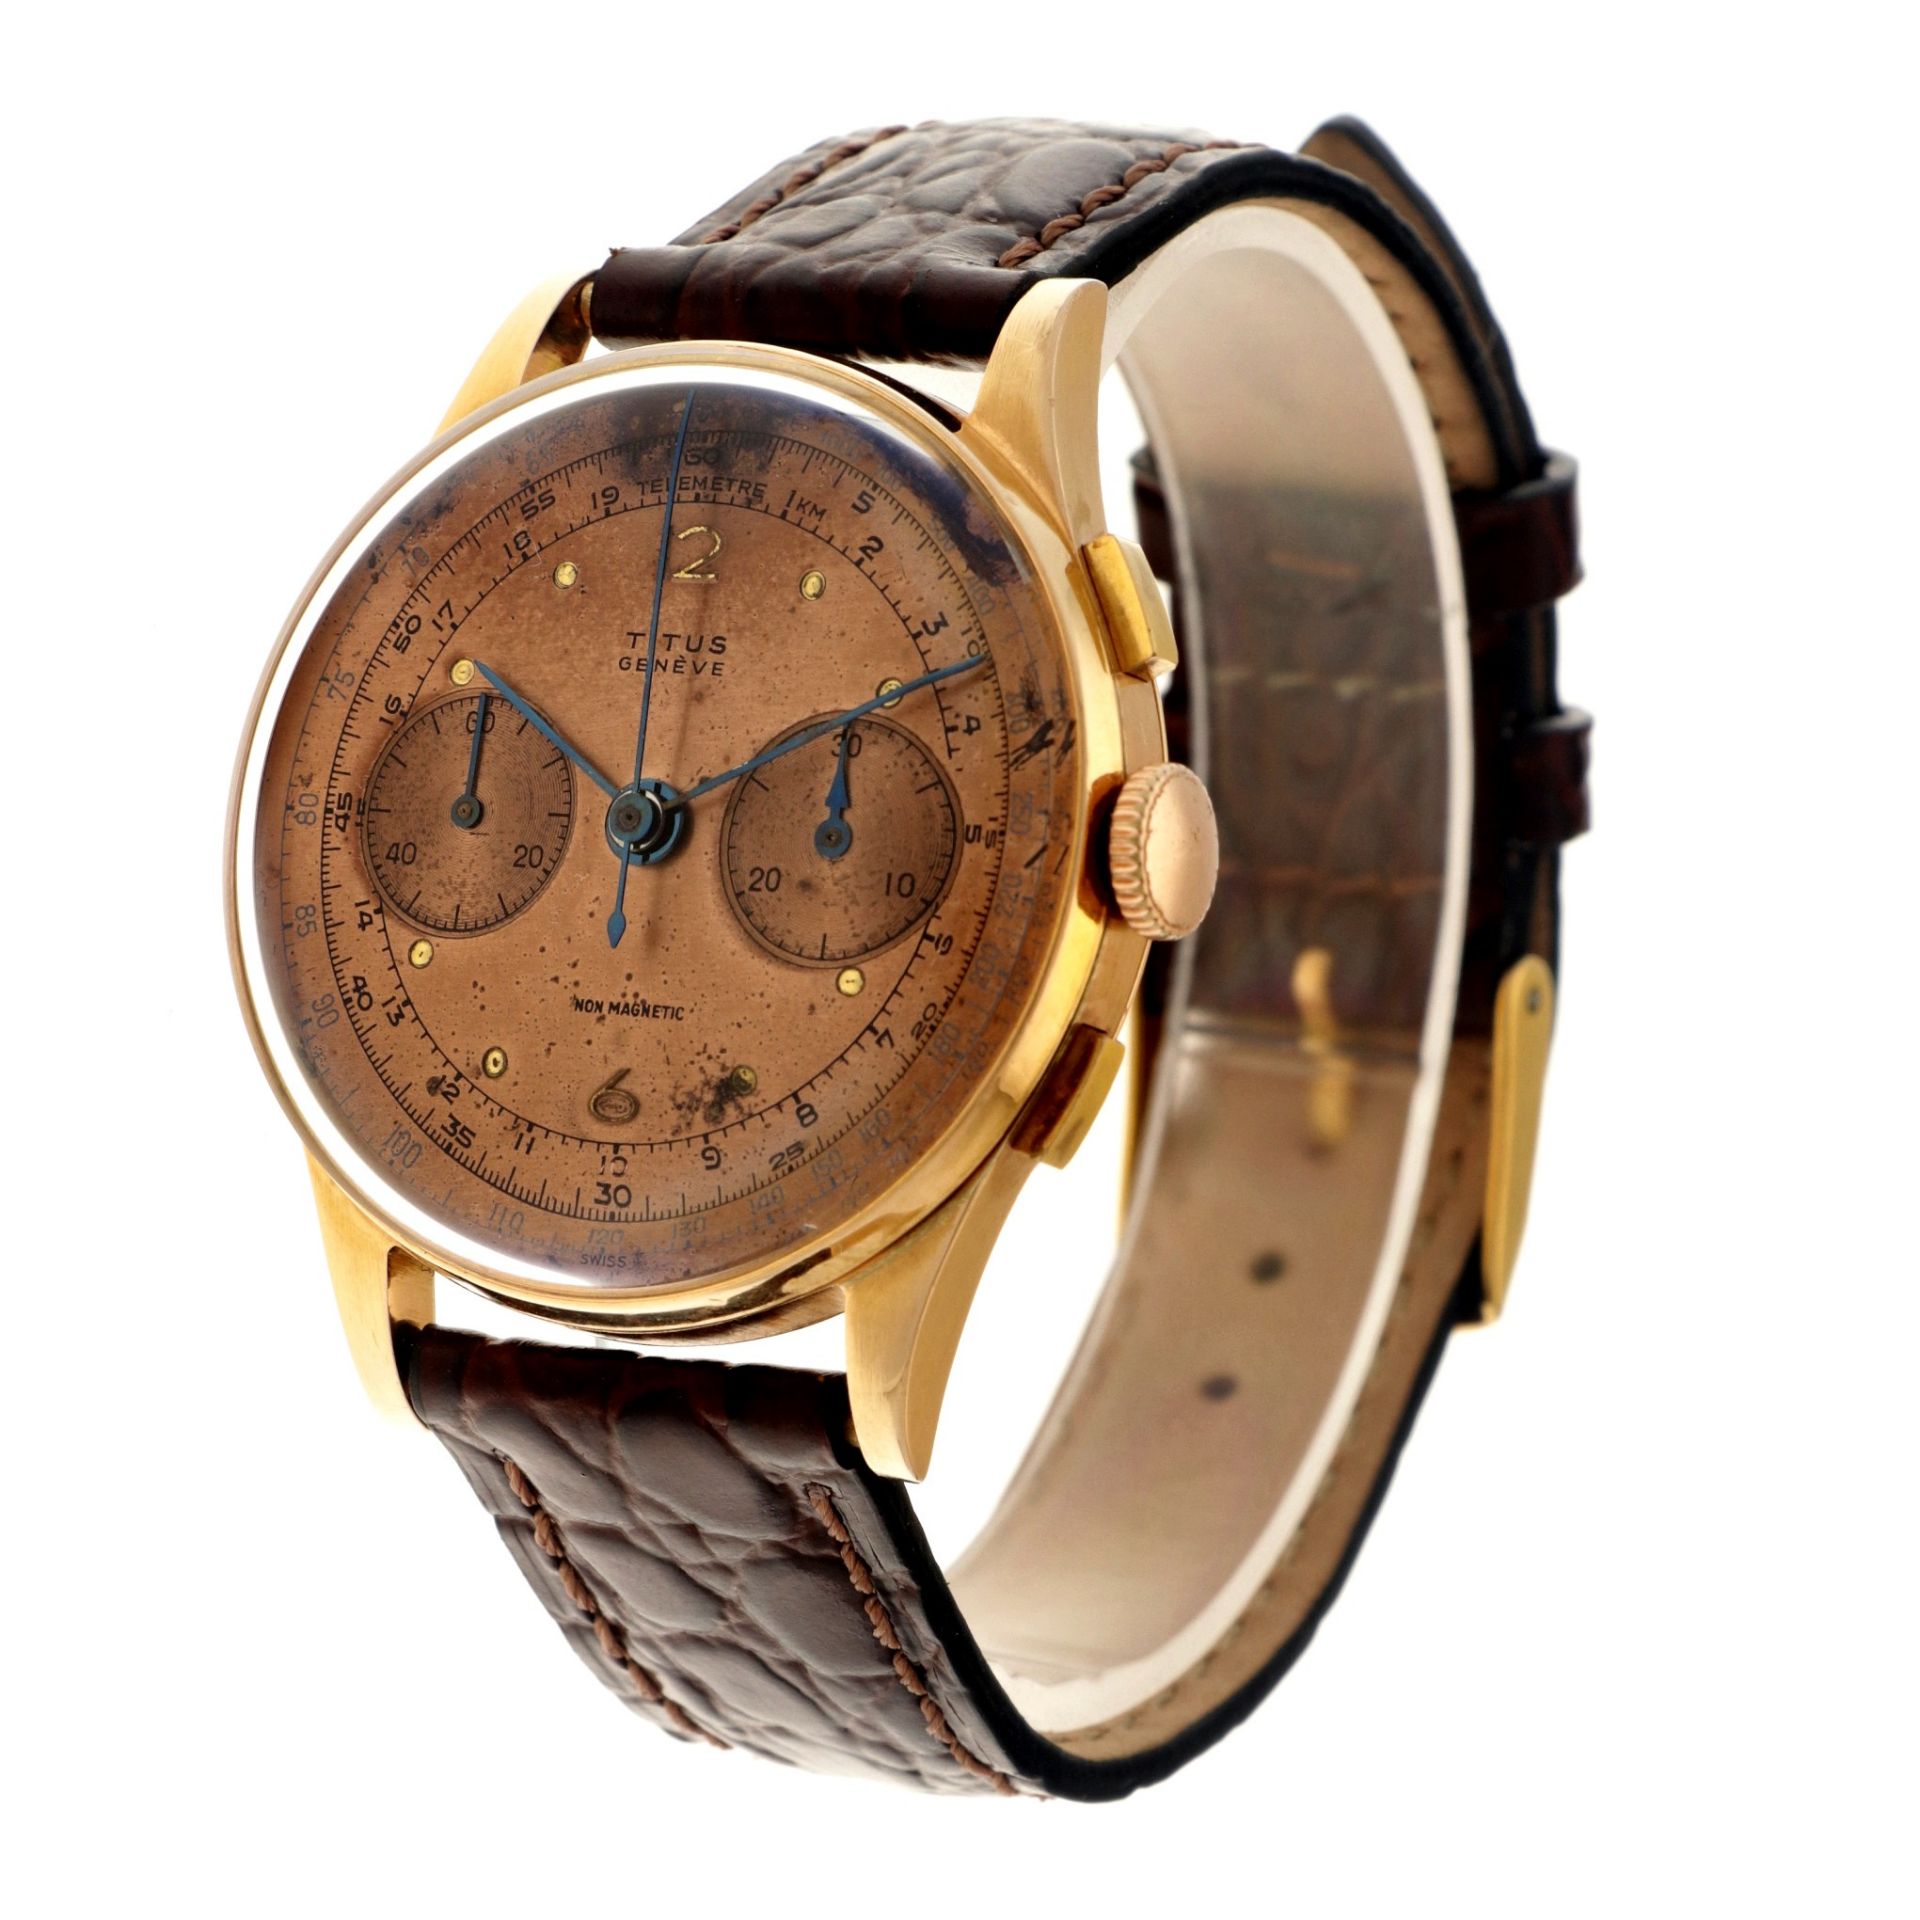 No Reserve - Titus Chronograph Suisse 18K. - Men's watch. - Image 2 of 6